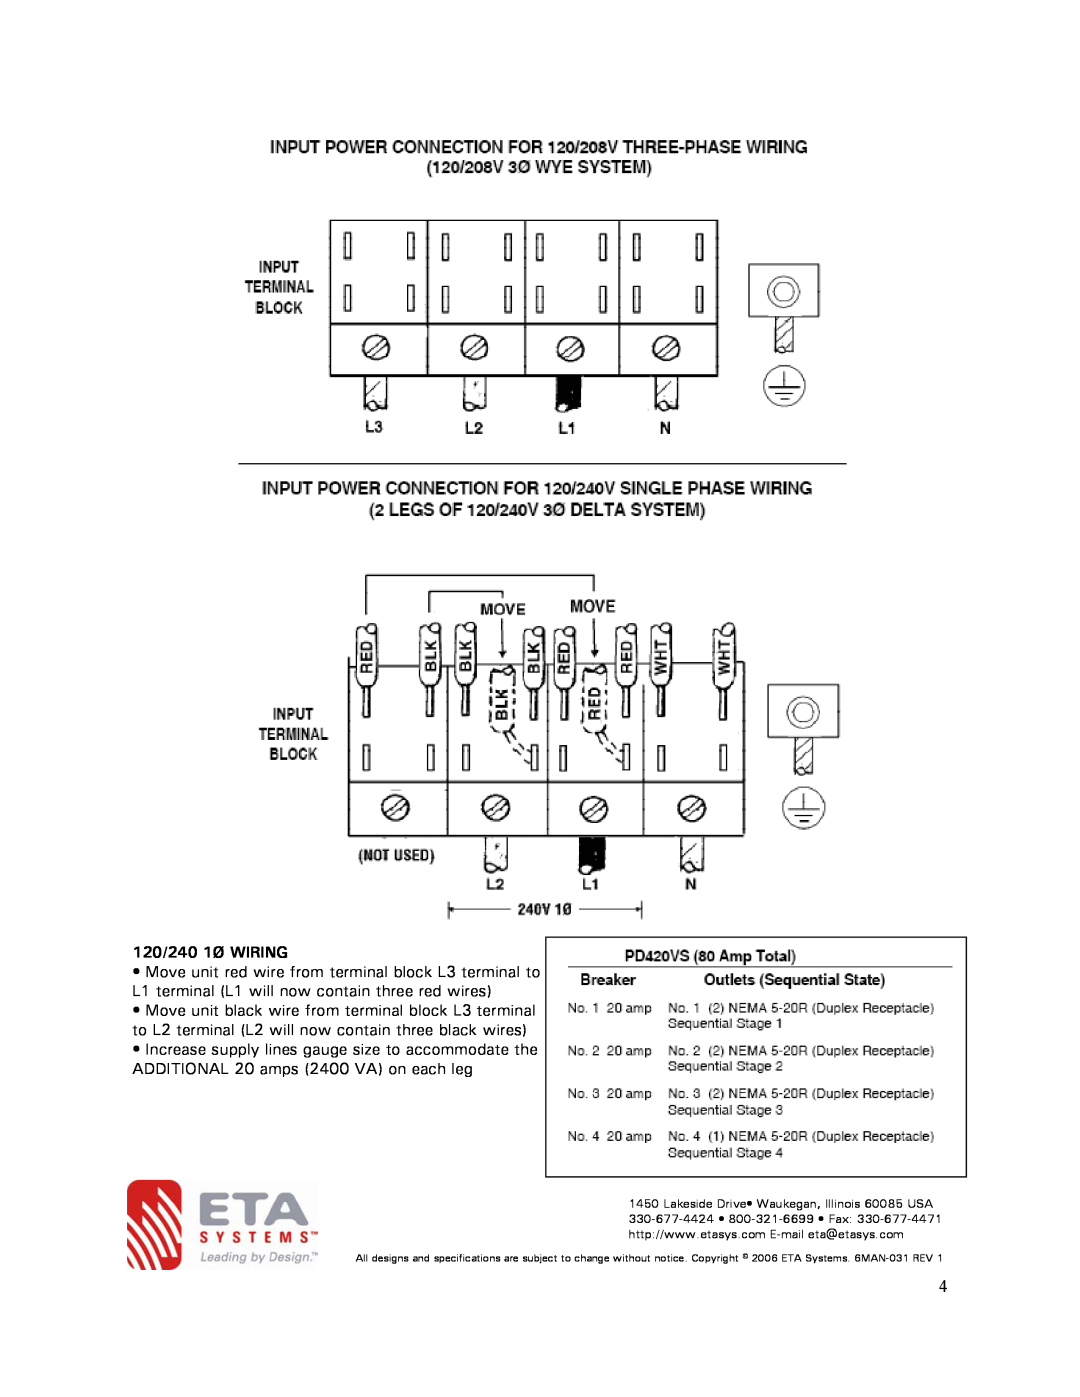 ETA Systems PD420VS owner manual 120/240 1Ø WIRING 